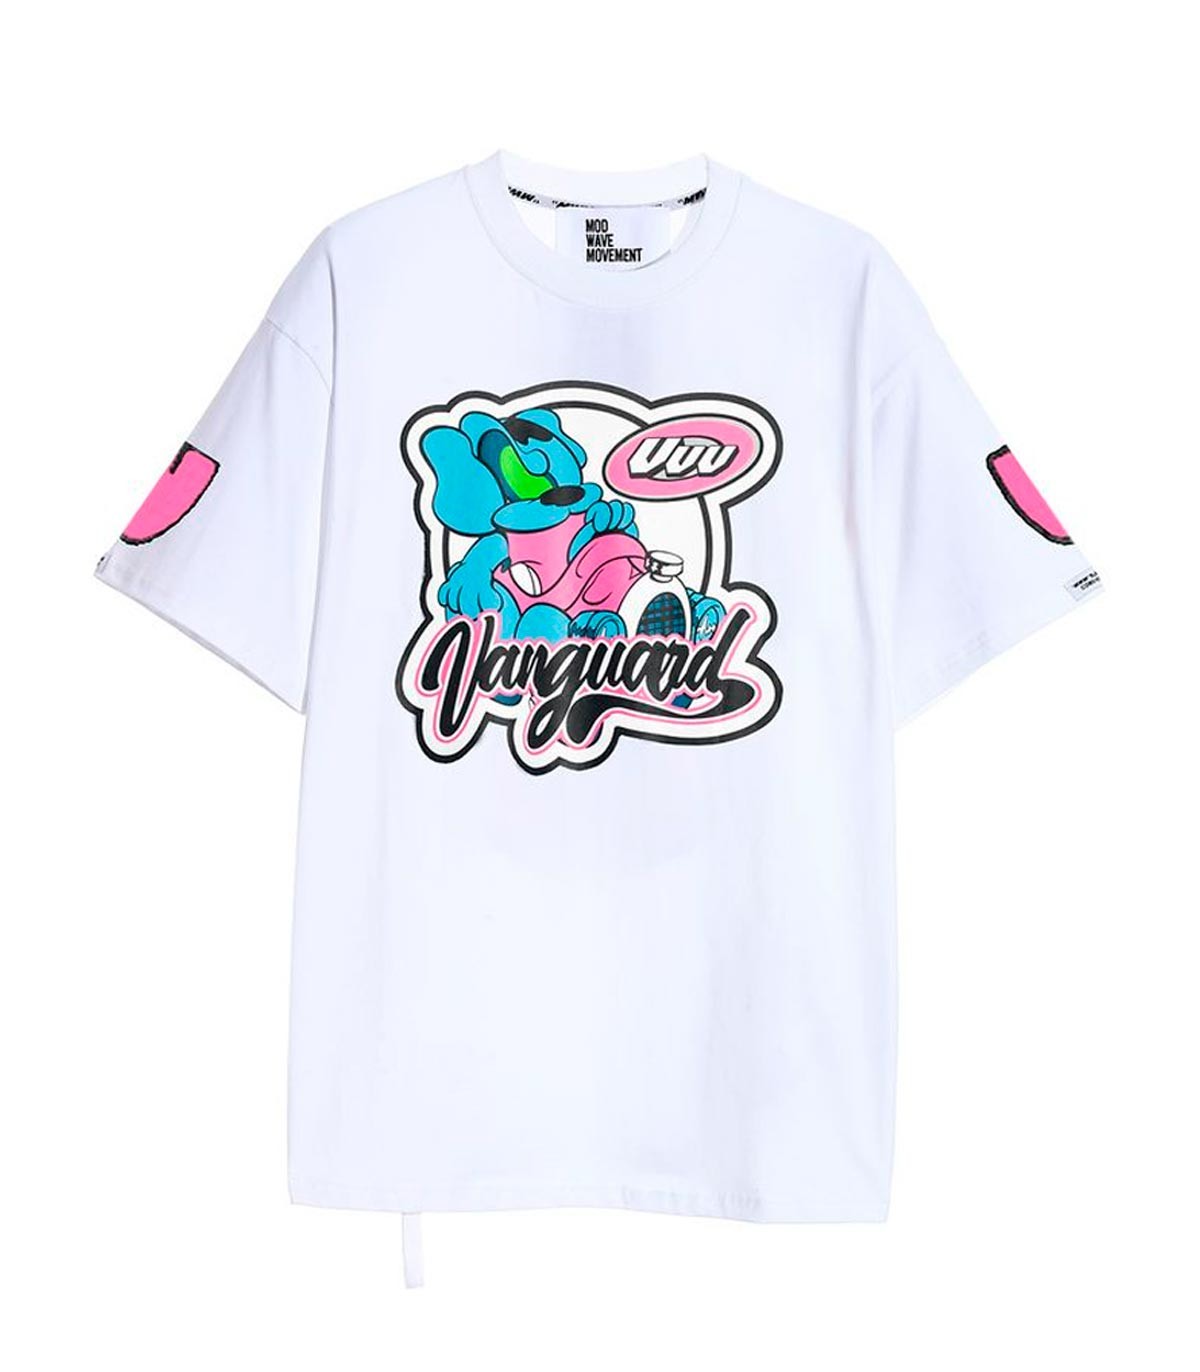 Mod Wave Movement - Camiseta Vanguards Dog Capsule - Blanco